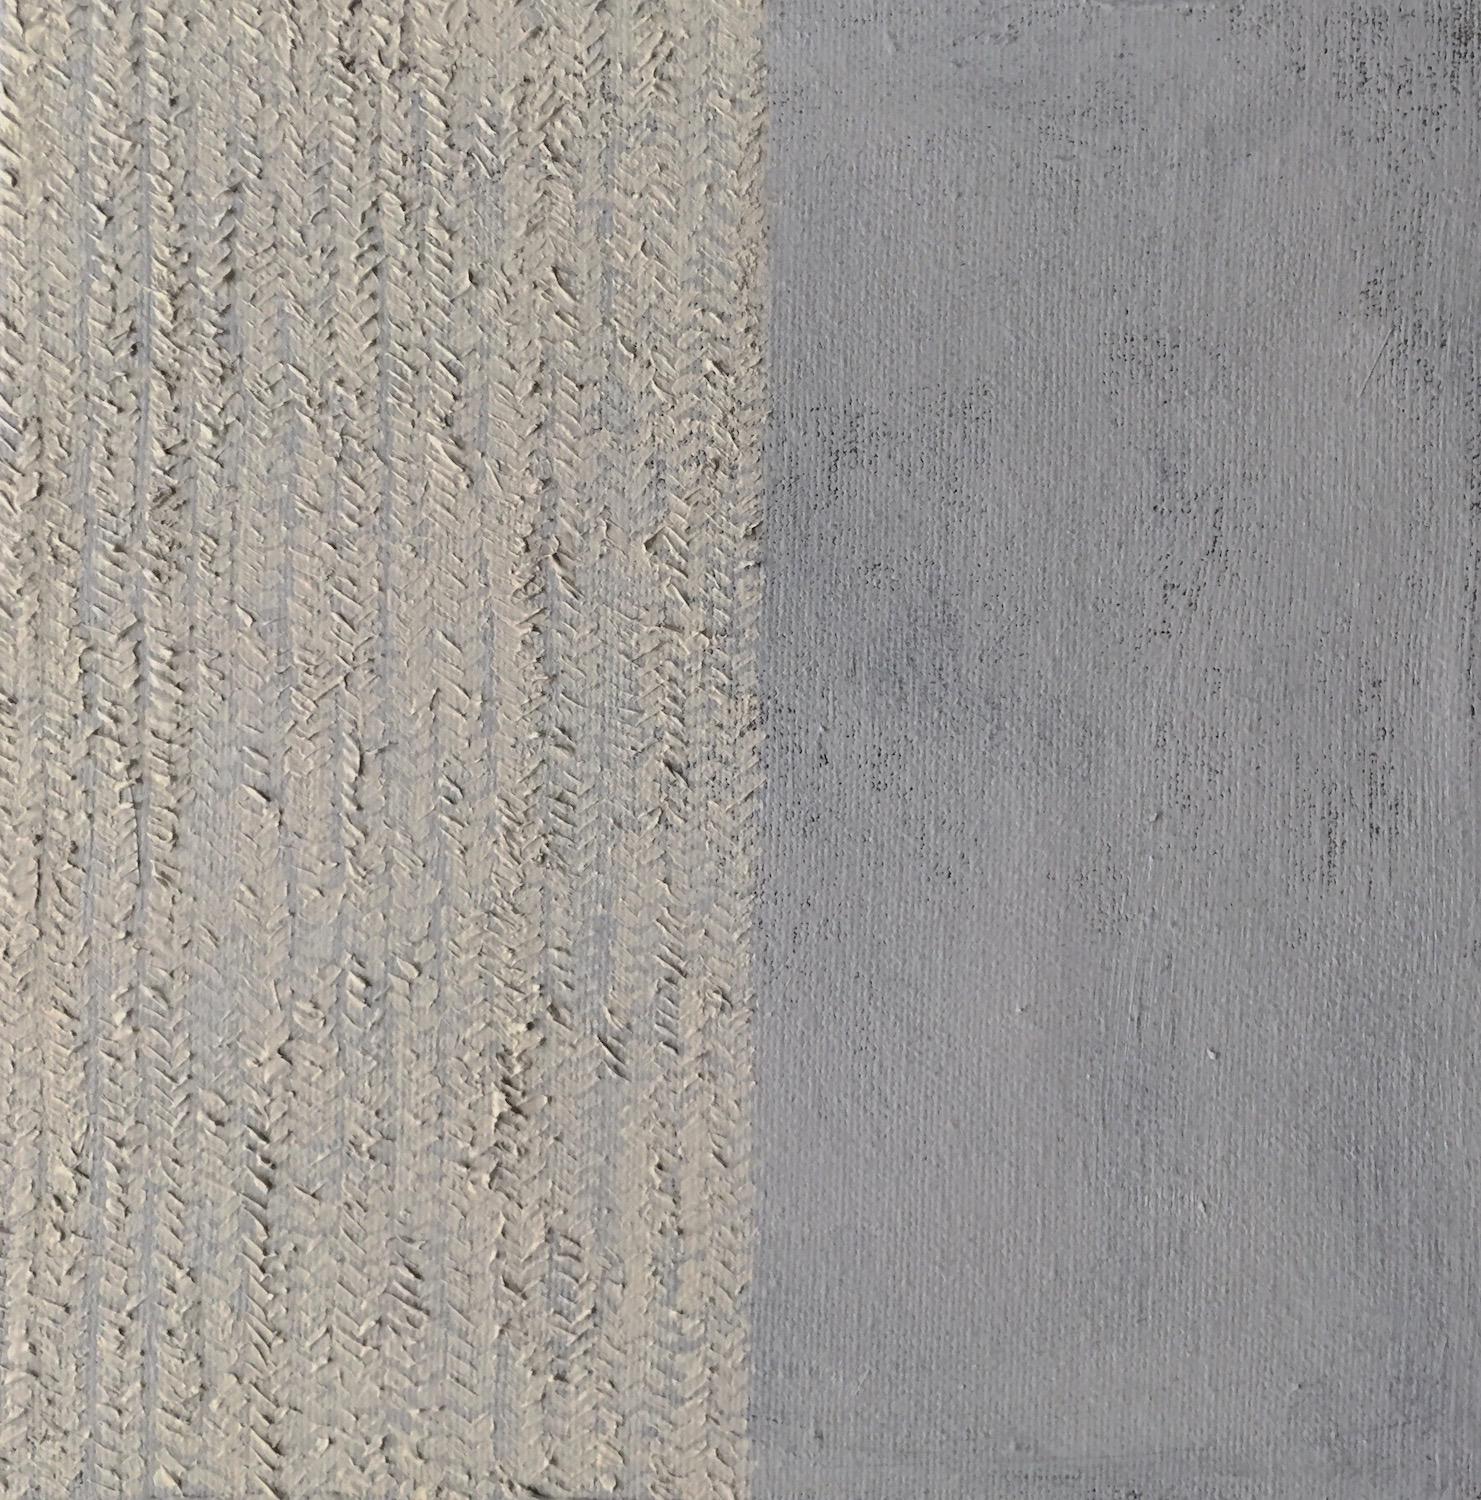 Andrea Stajan-Ferkul Abstract Painting - Untitled (Abstract 20) Minimal, Textured, Grey, Beige, Neutrals